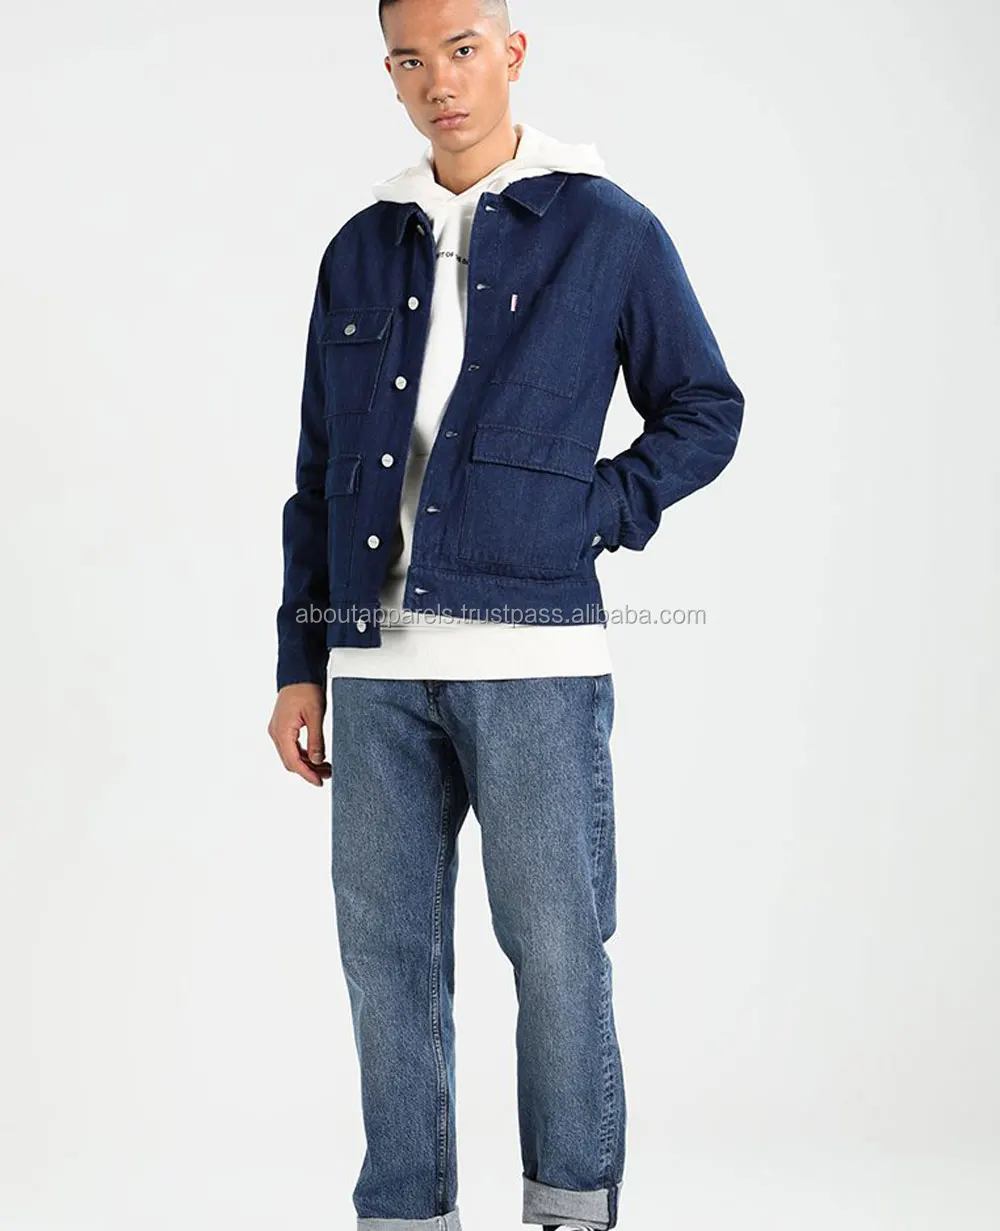 mens dark blue jean jacket